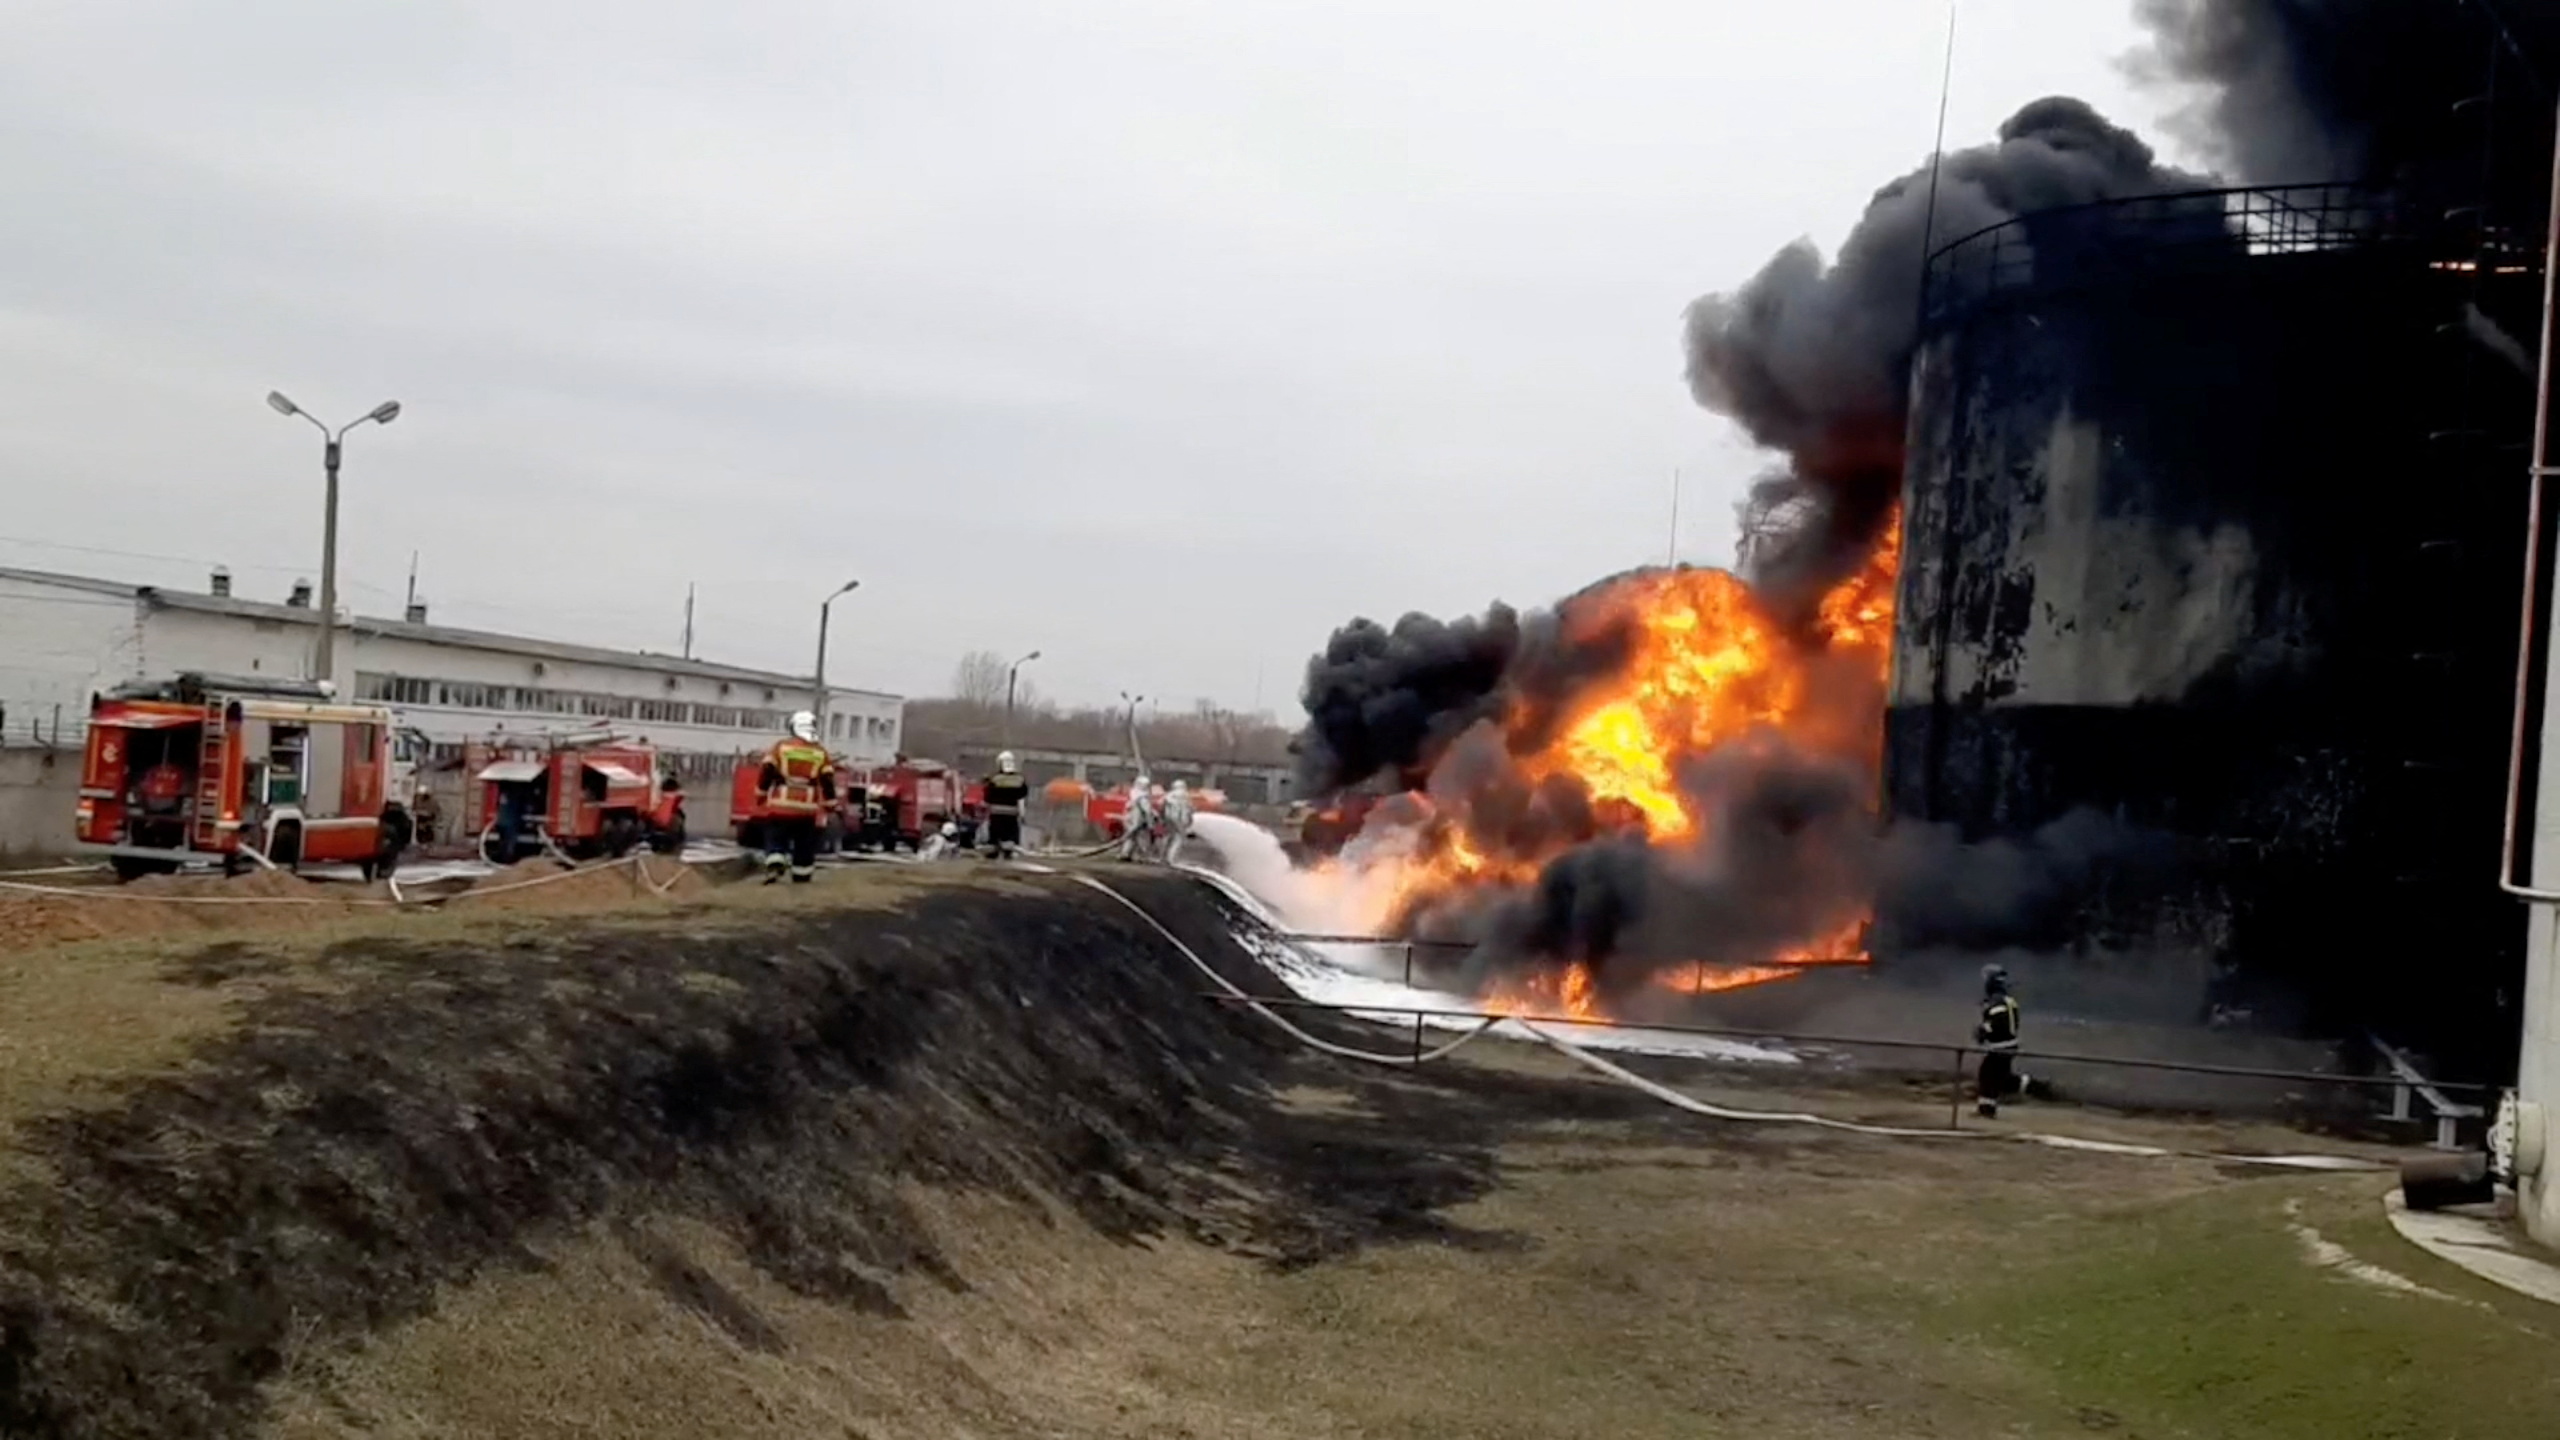 A still image shows a fuel depot on fire in Belgorod